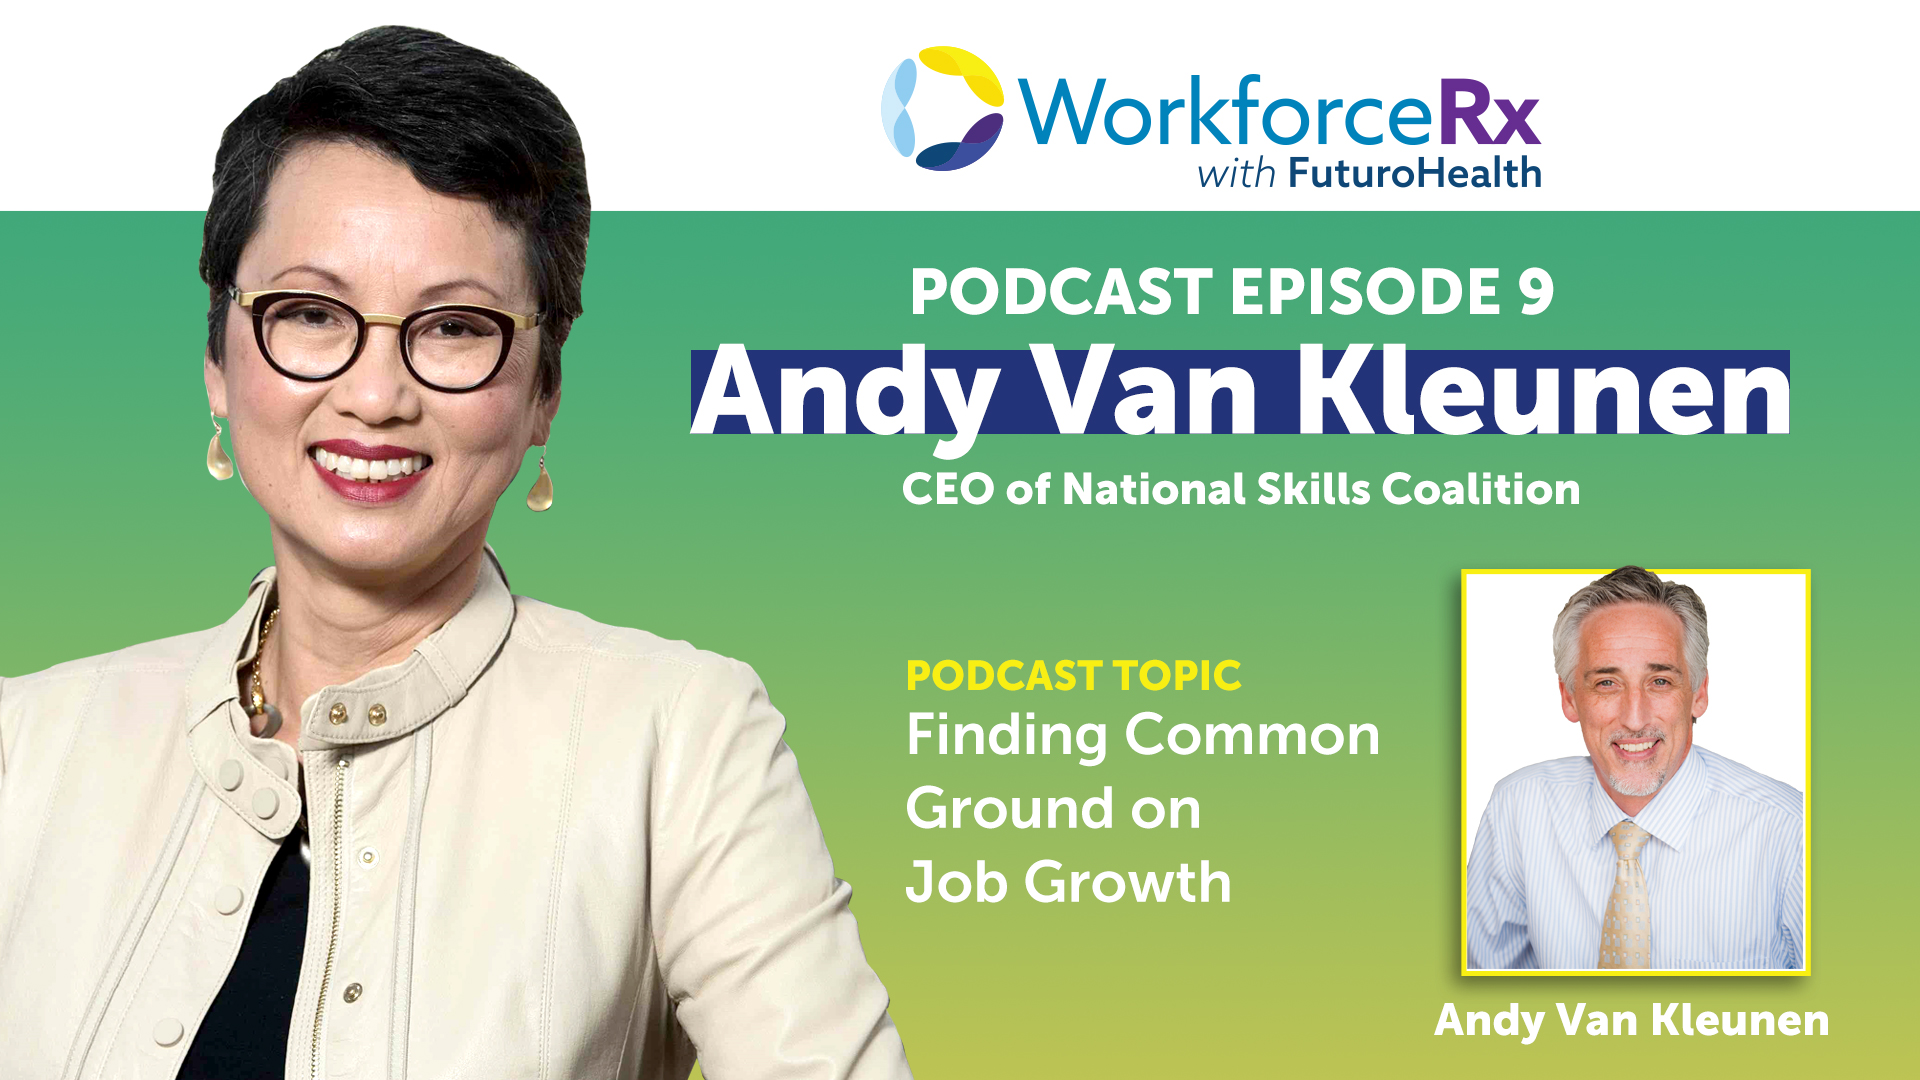 Andy Van Kleunen, CEO of National Skills Coalition: Finding Common Ground on Job Growth